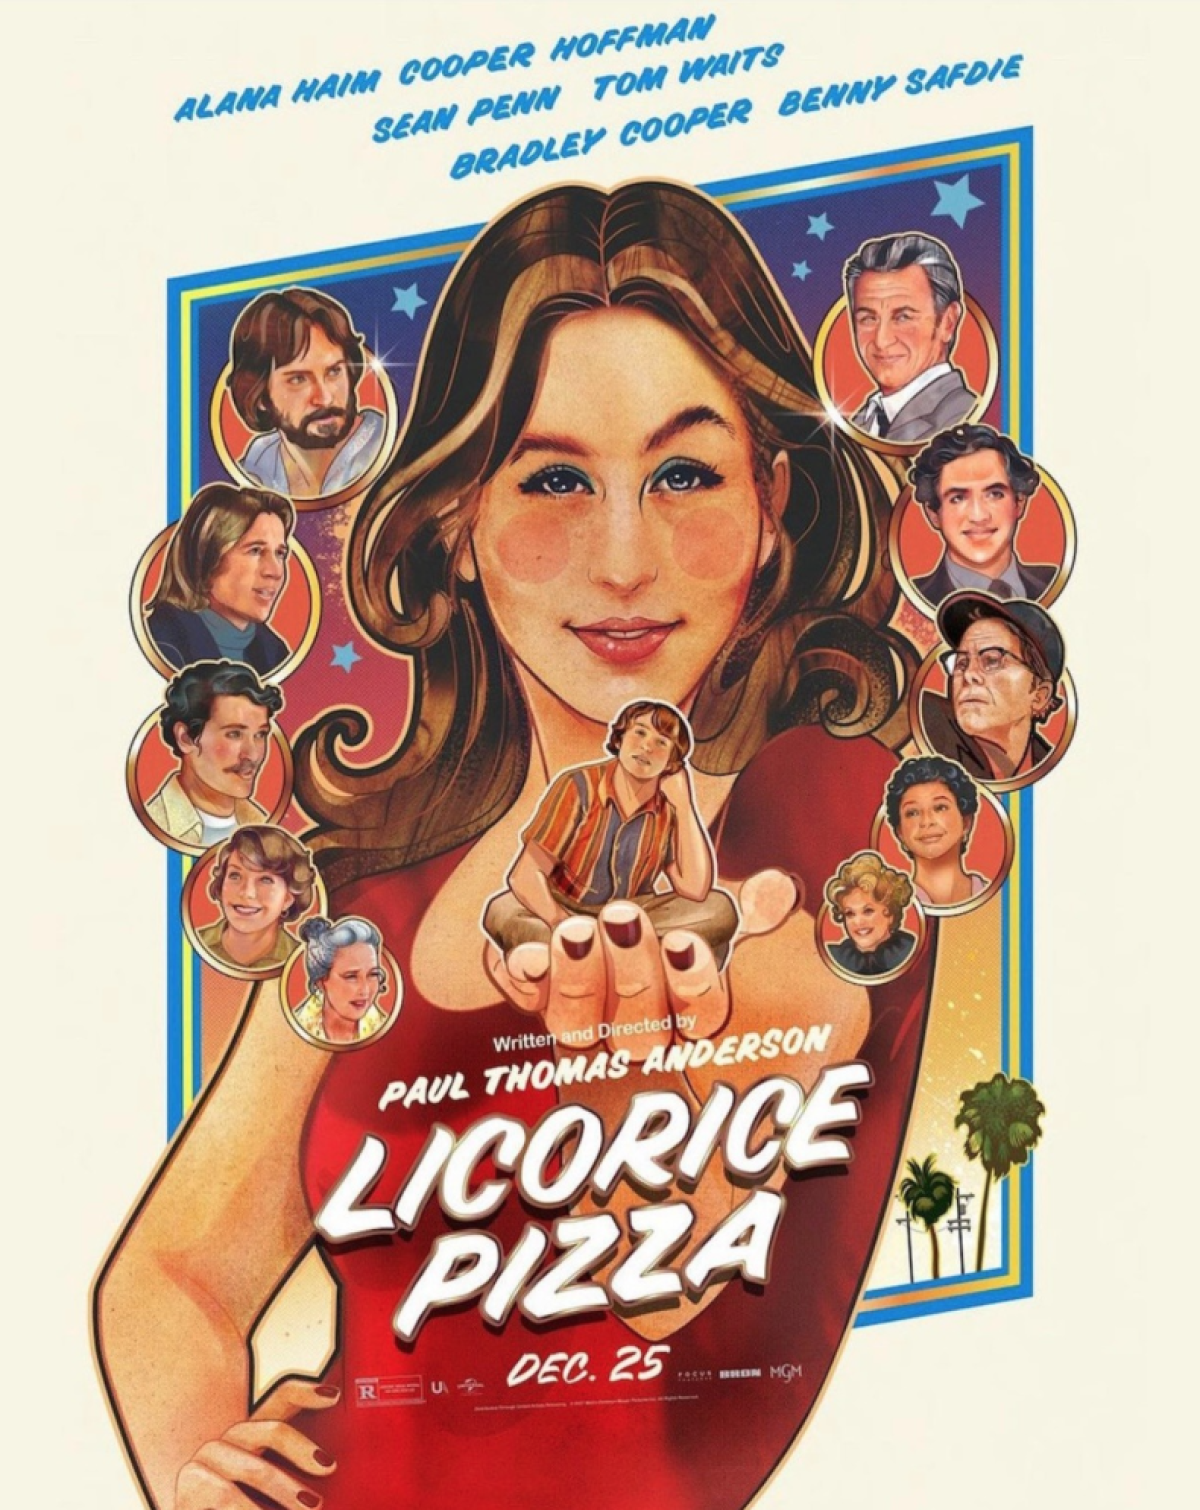 The "Licorice Pizza" movie poster.